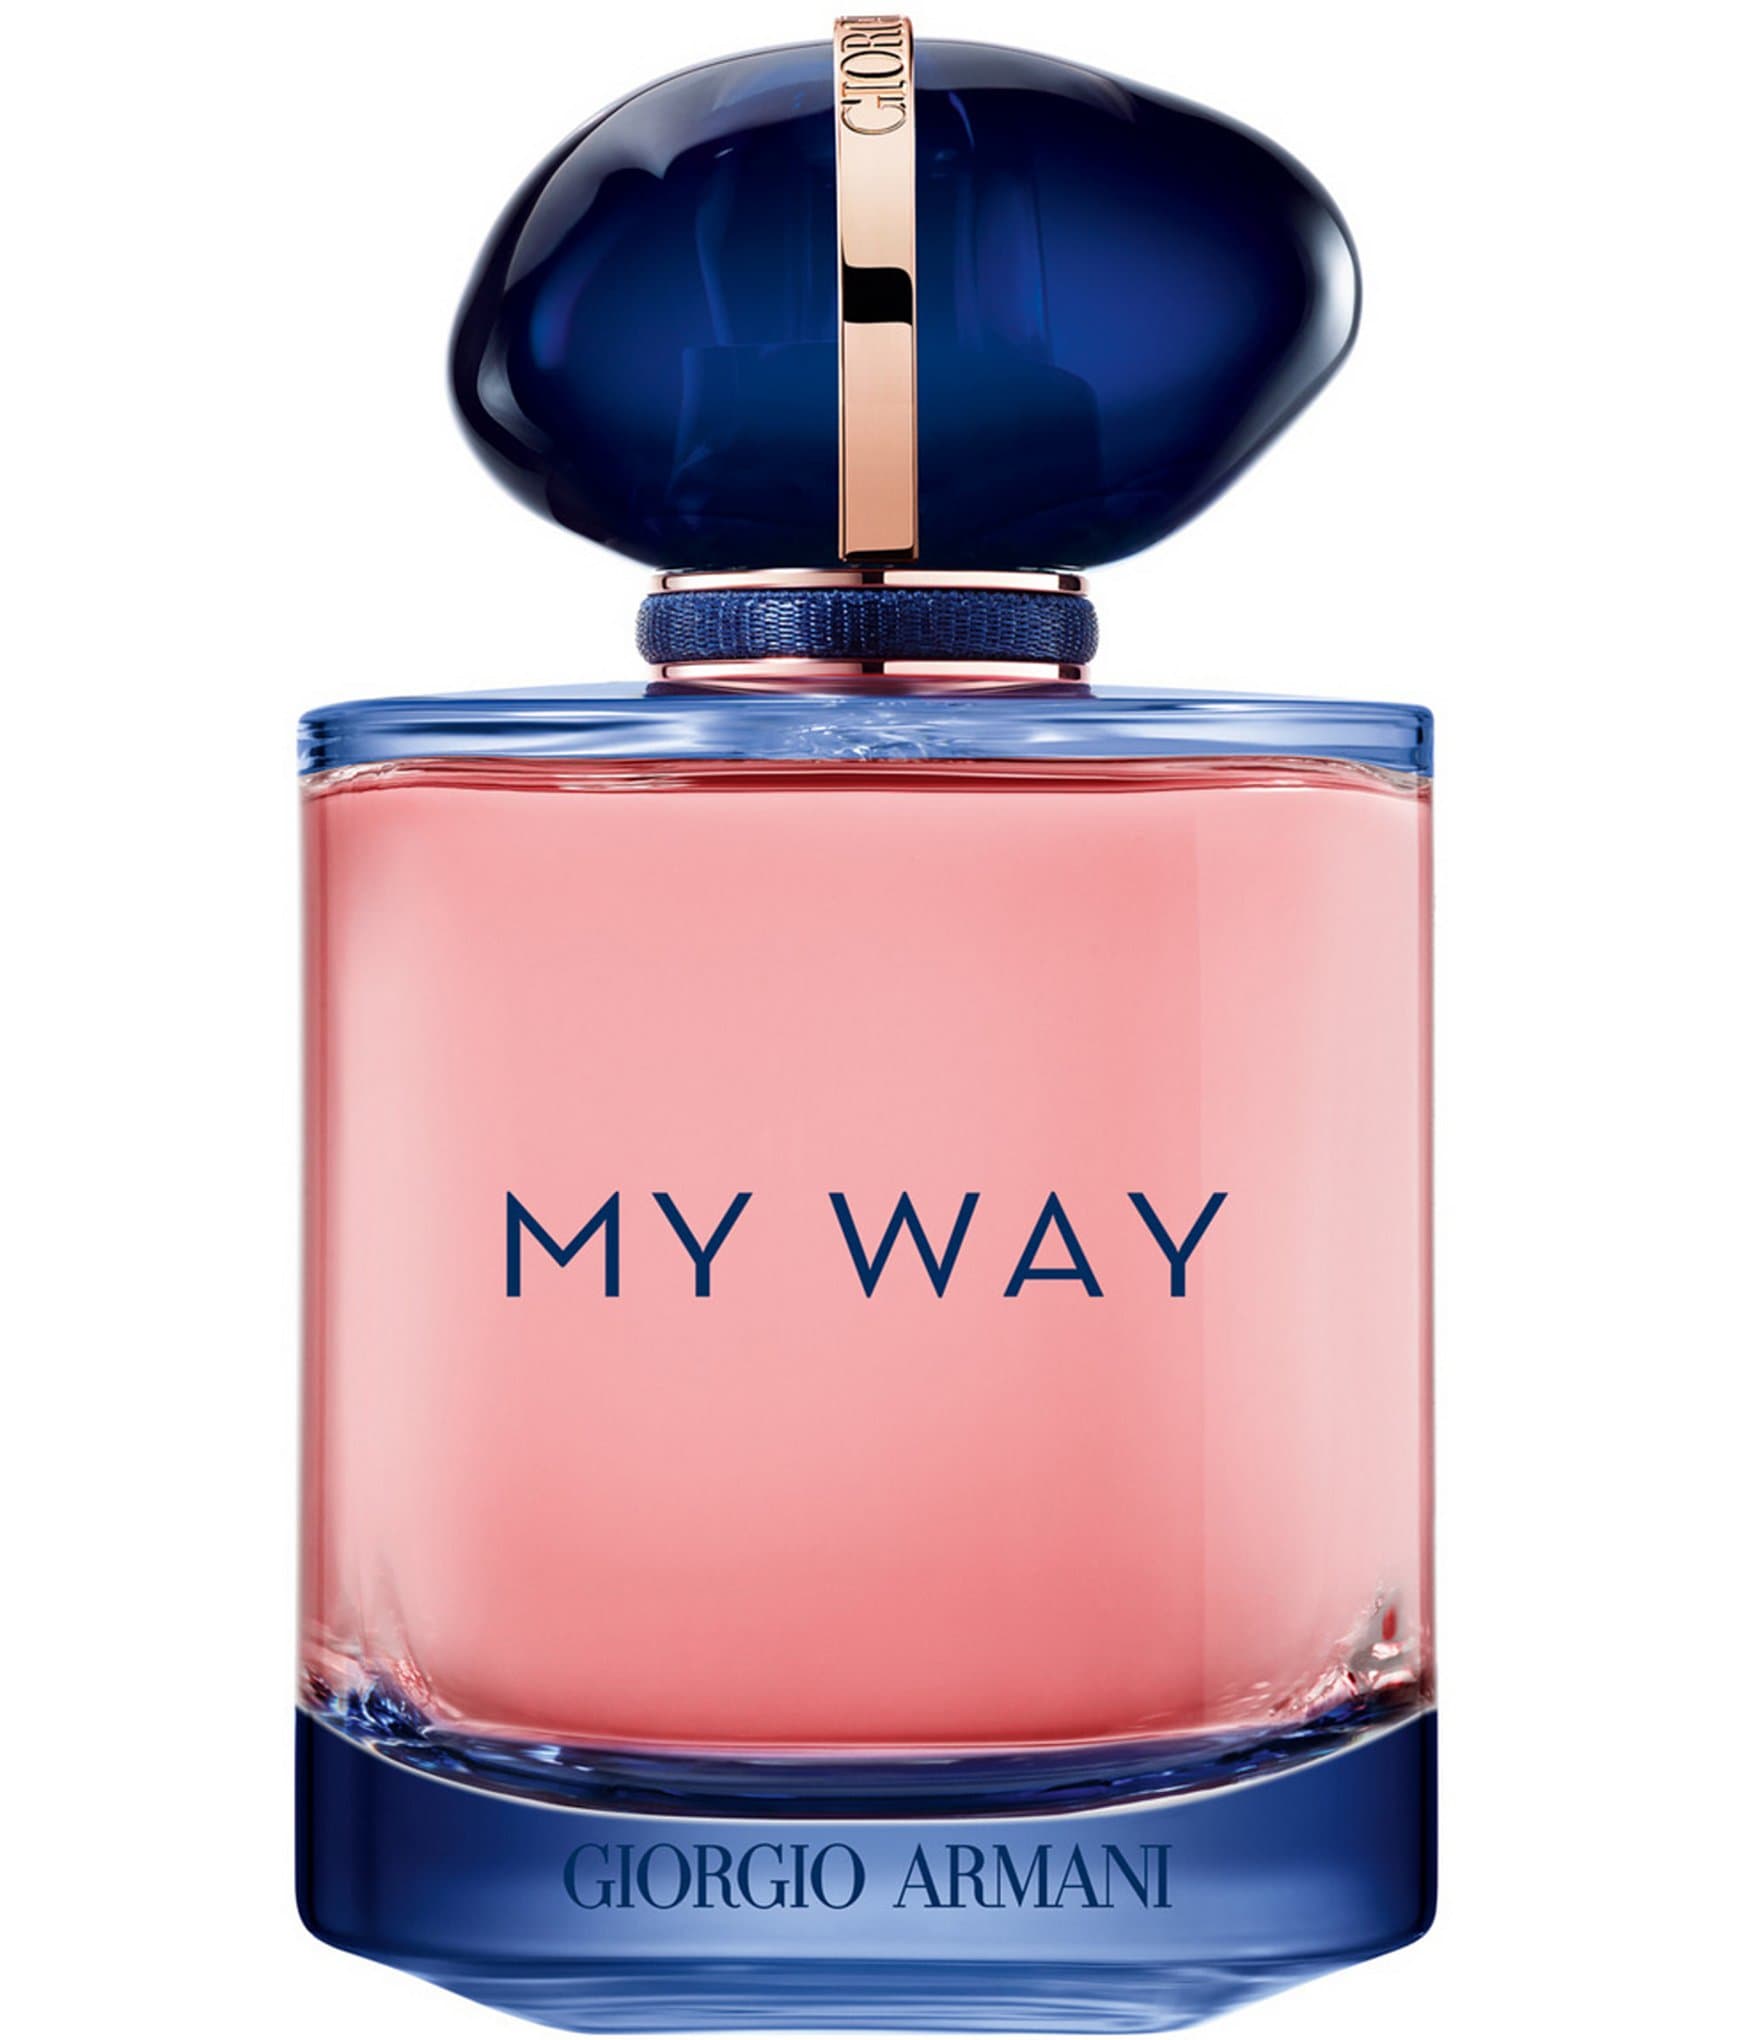 Giorgio Armani ARMANI beauty My Way Eau de Parfum Intense | Dillard's